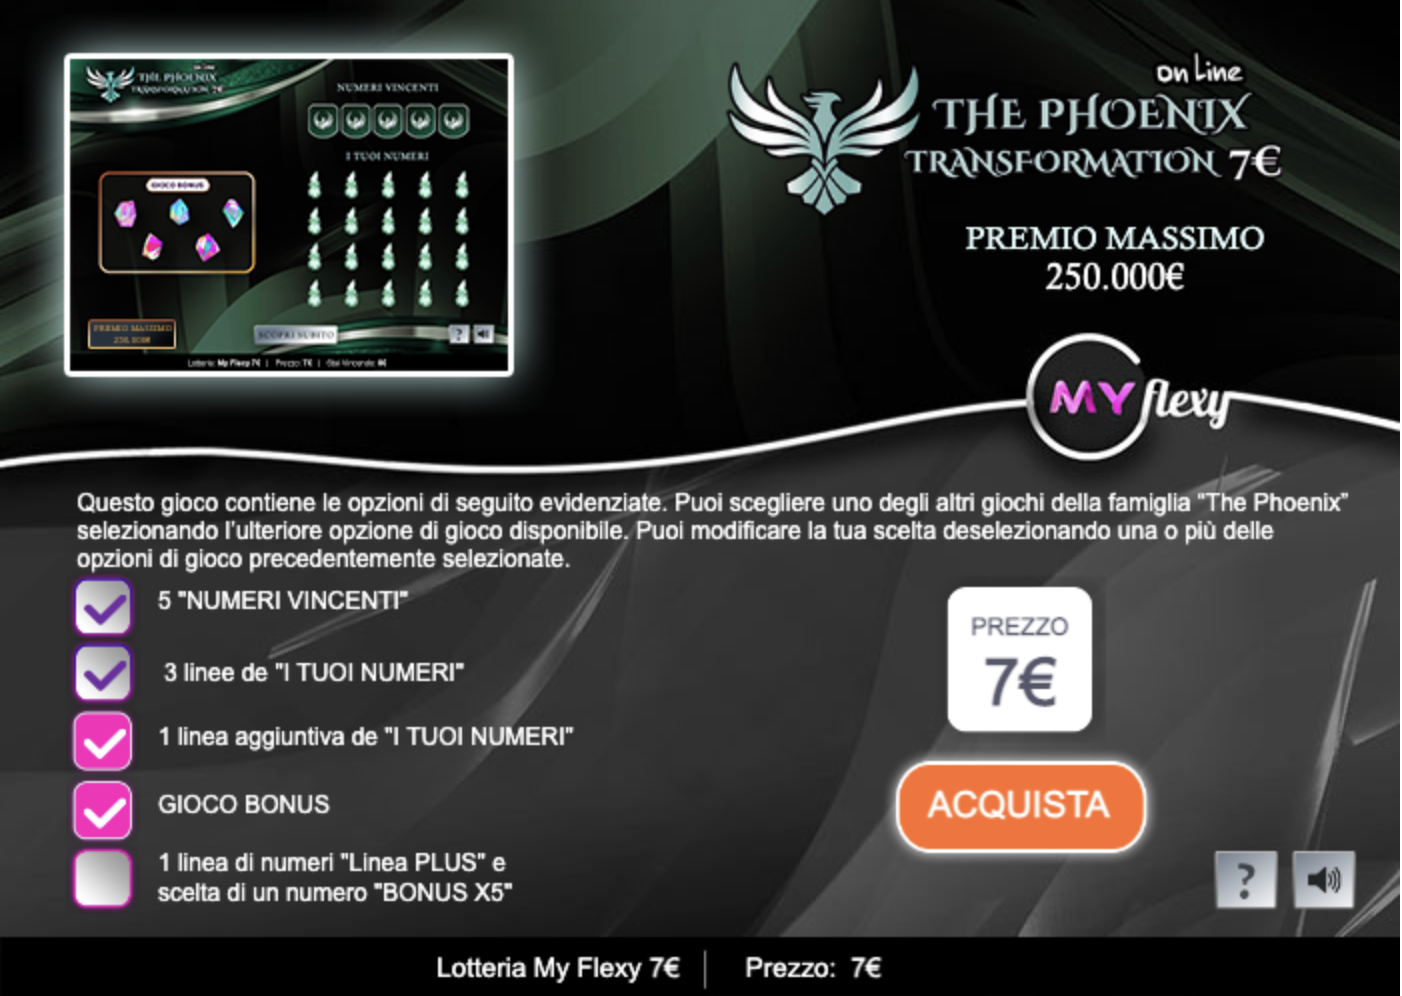 The Phoenix Transformation 7€ - online